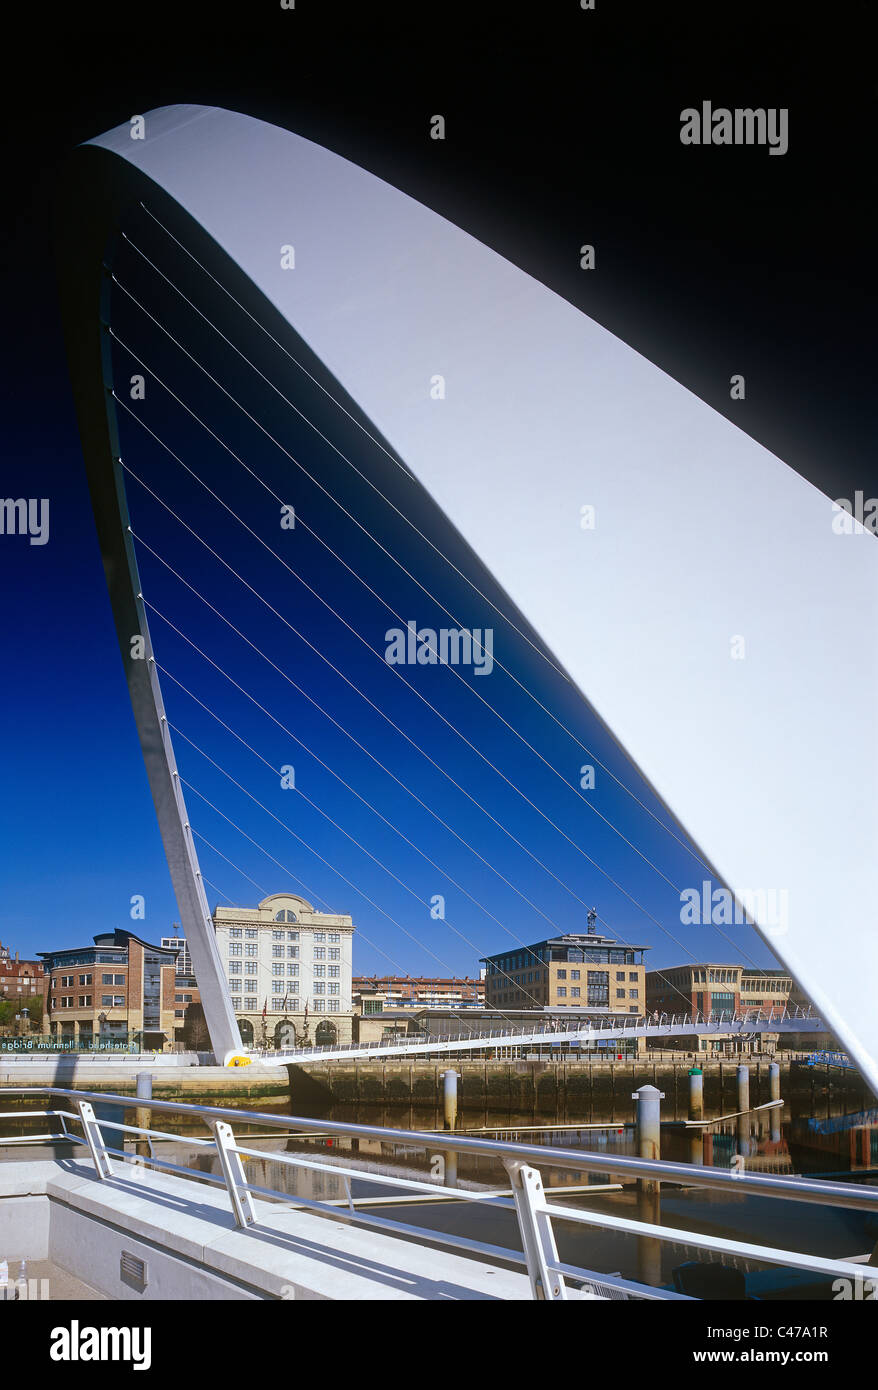 Gateshead Millennium Bridge, Gateshead, Tyne and Wear Foto Stock